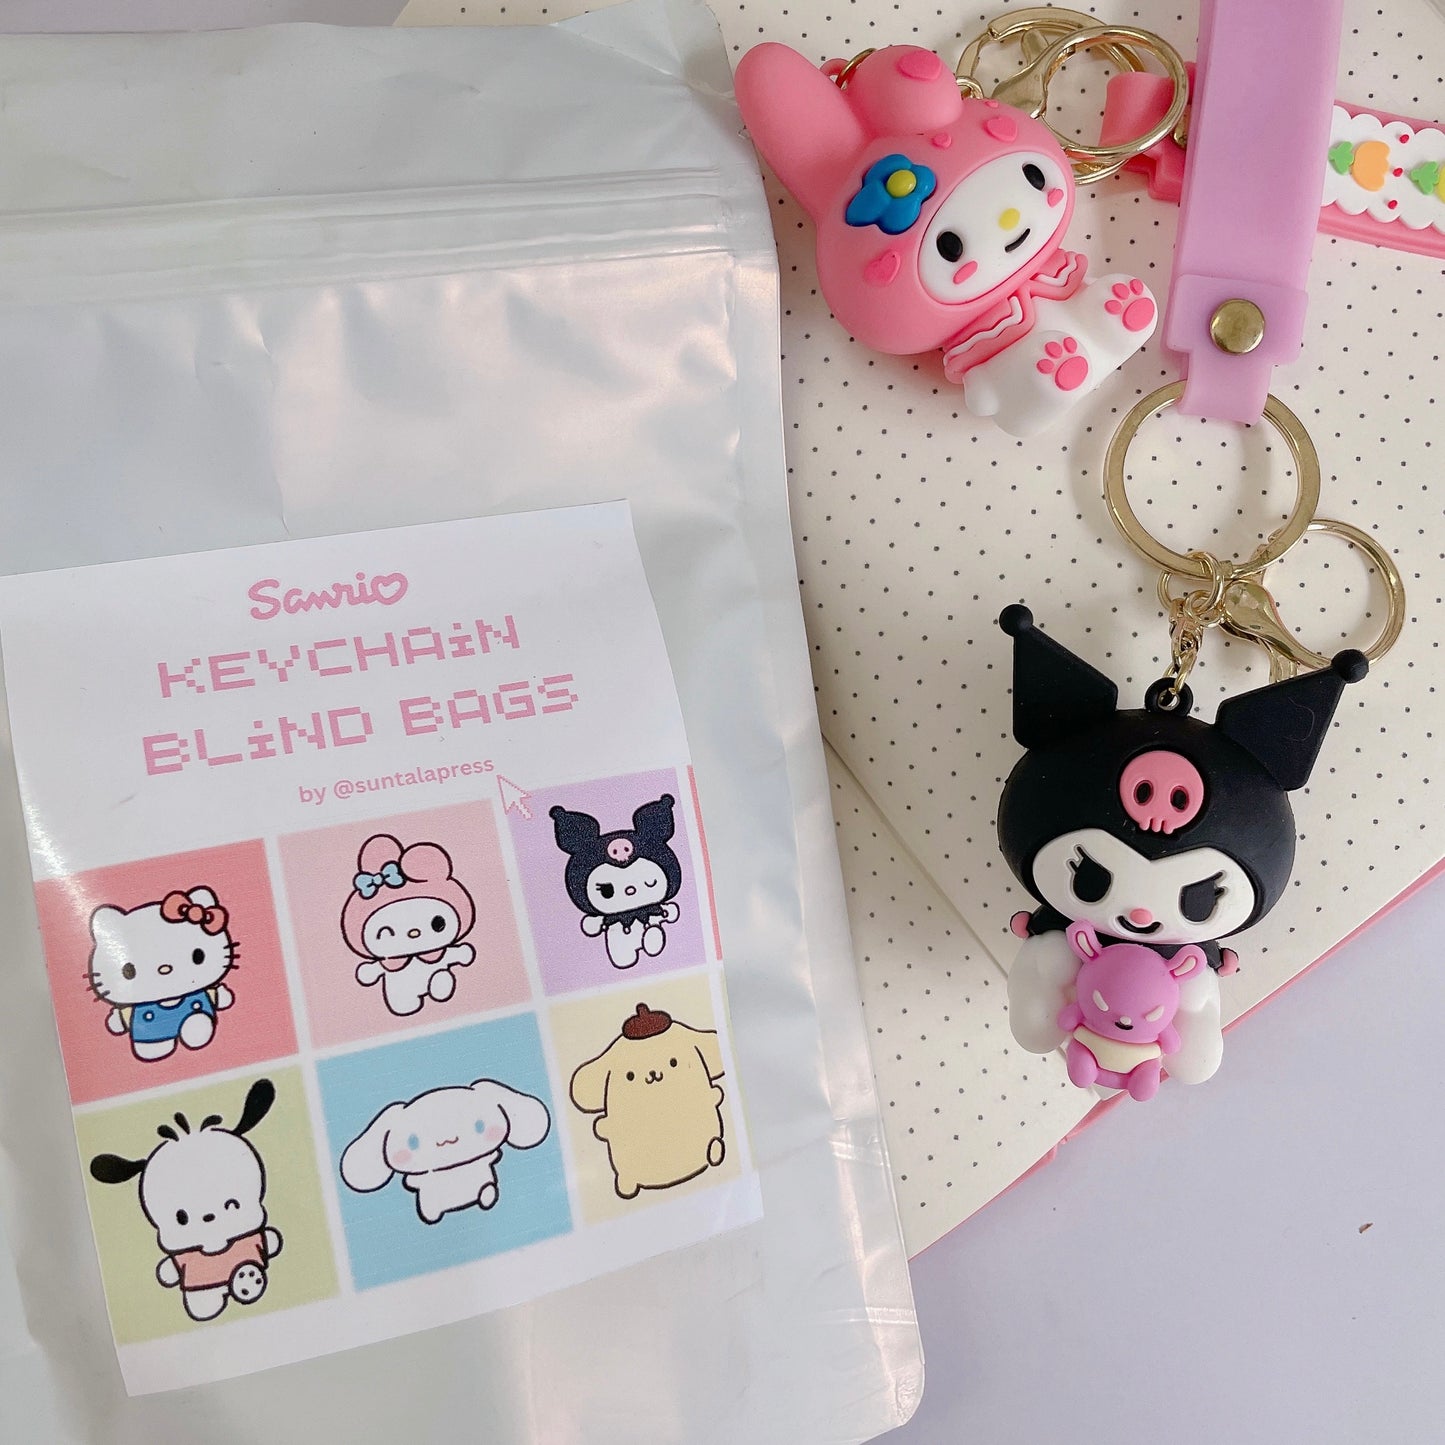 Sanrio Keychain Blind Bag